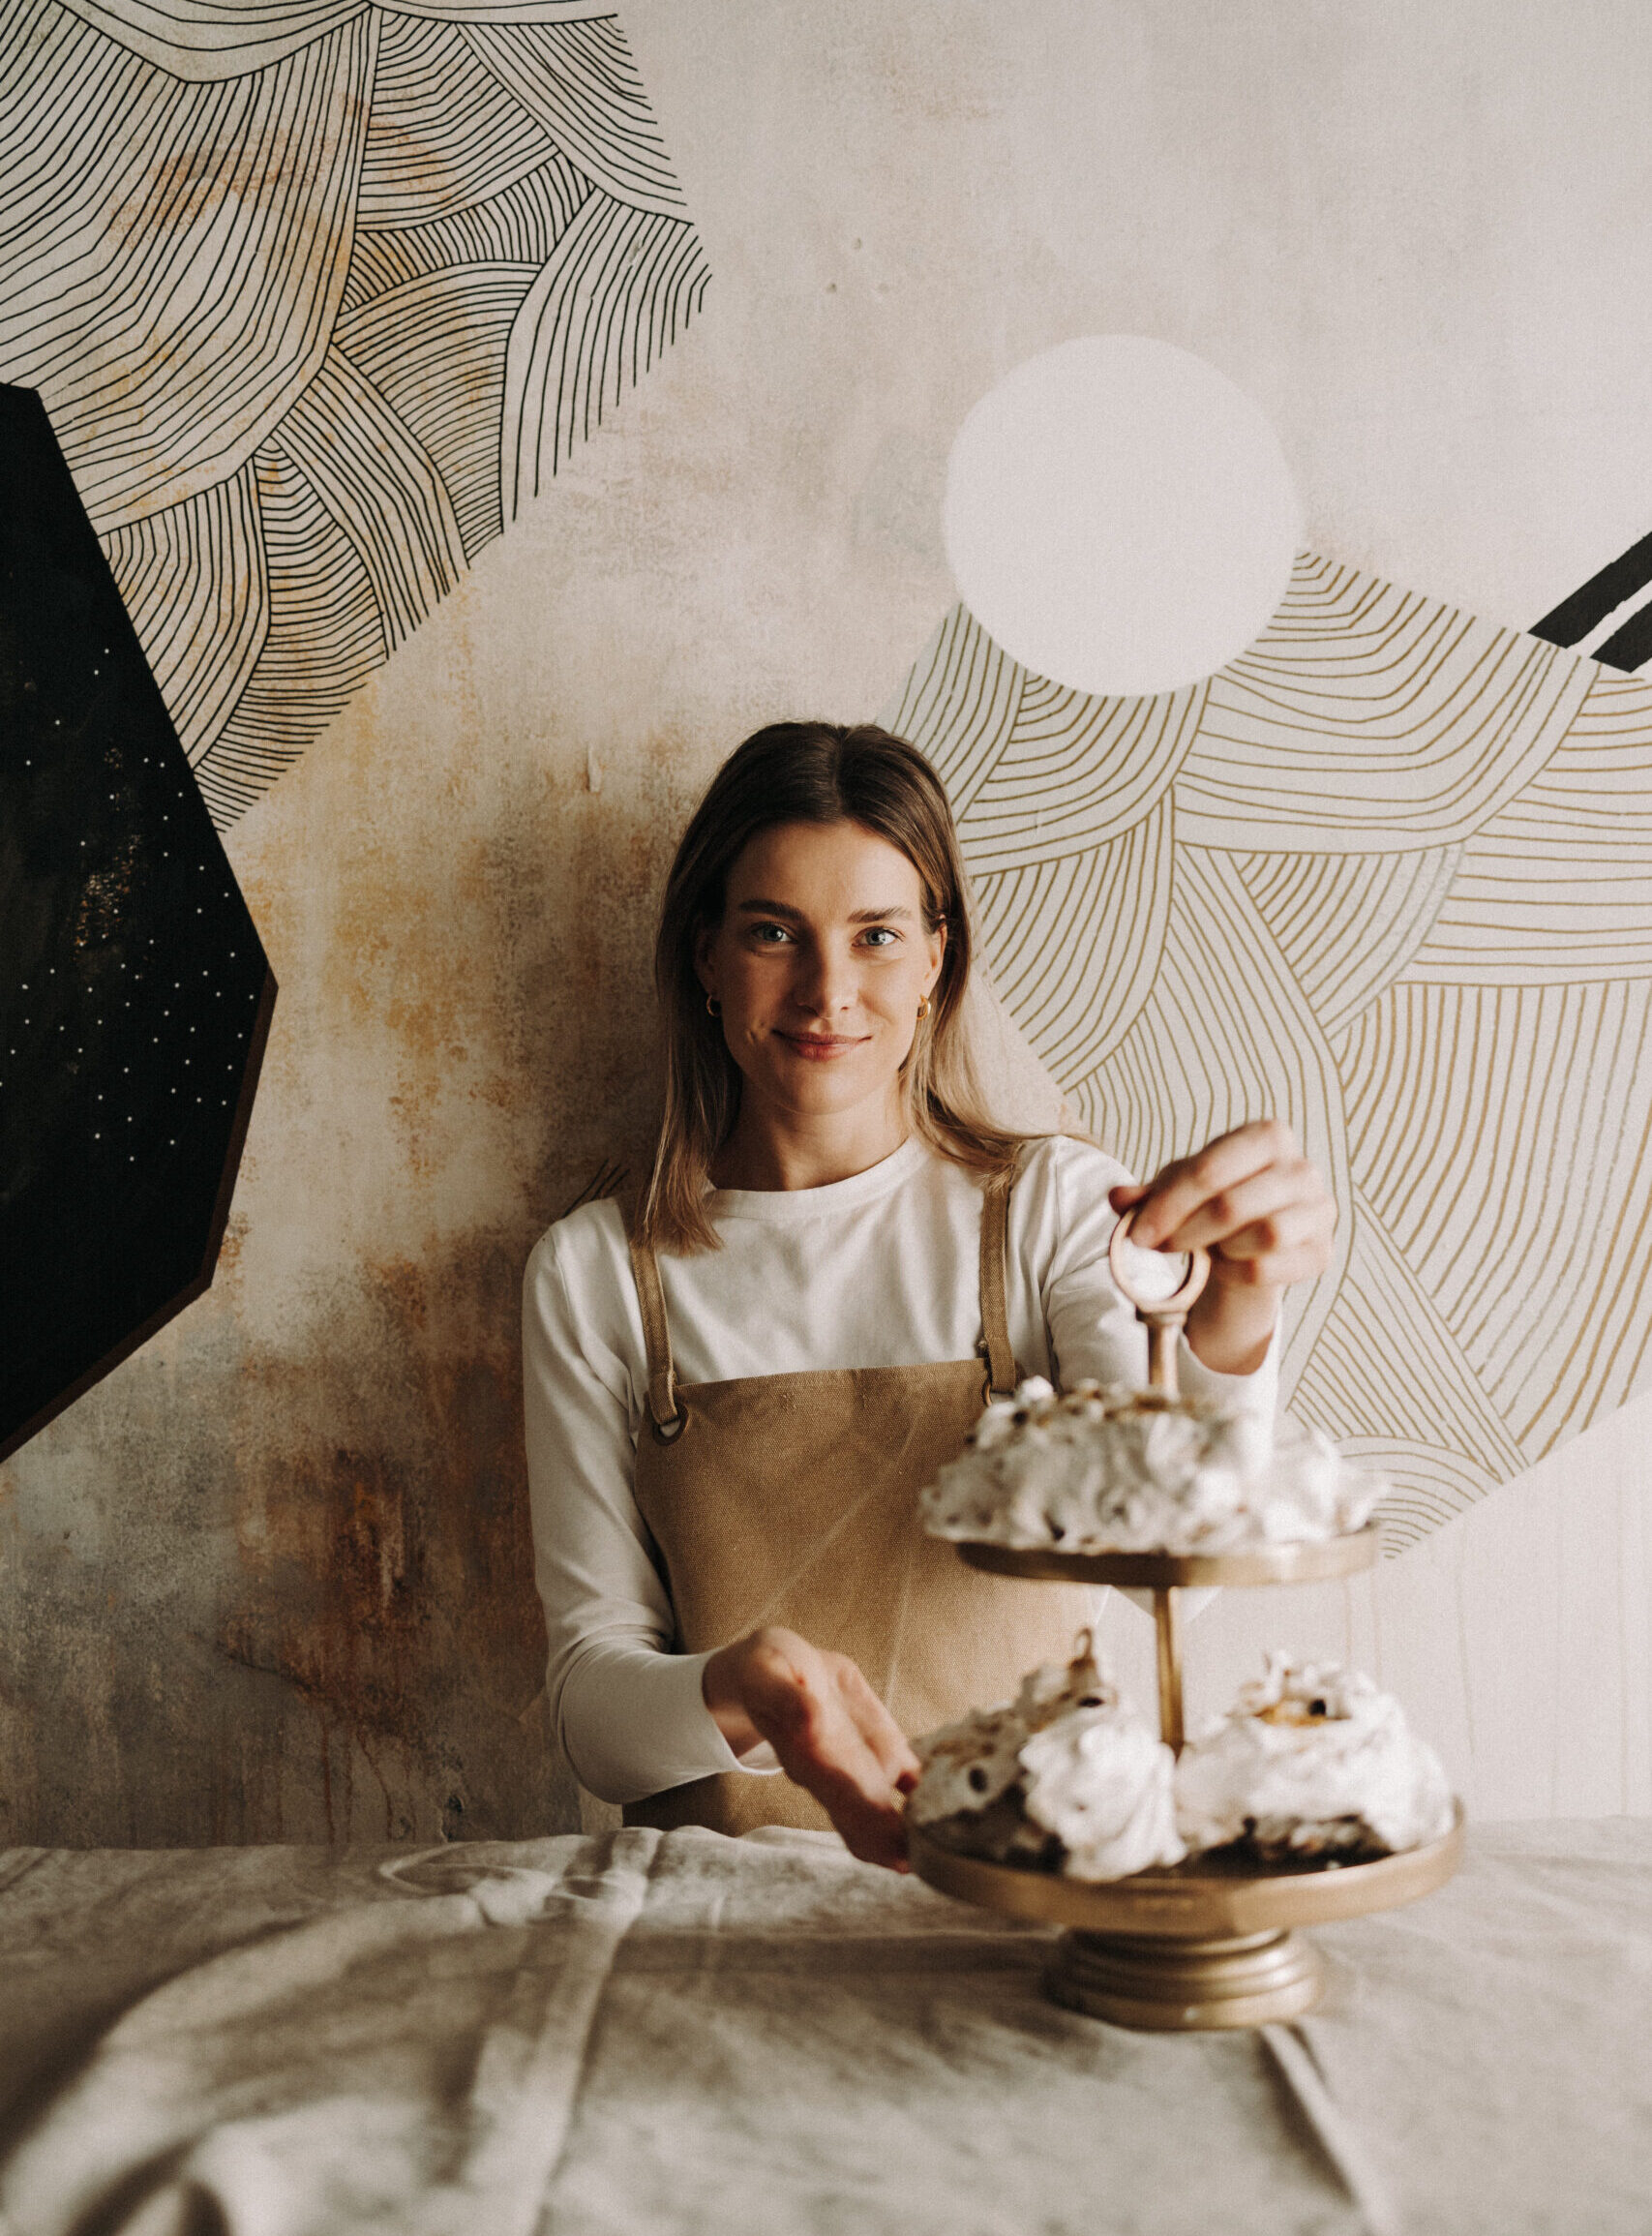 cremino bakery fotografia kulinarna sesja wizerunkowa kawiarni dziewczyna z bezami pavlowa